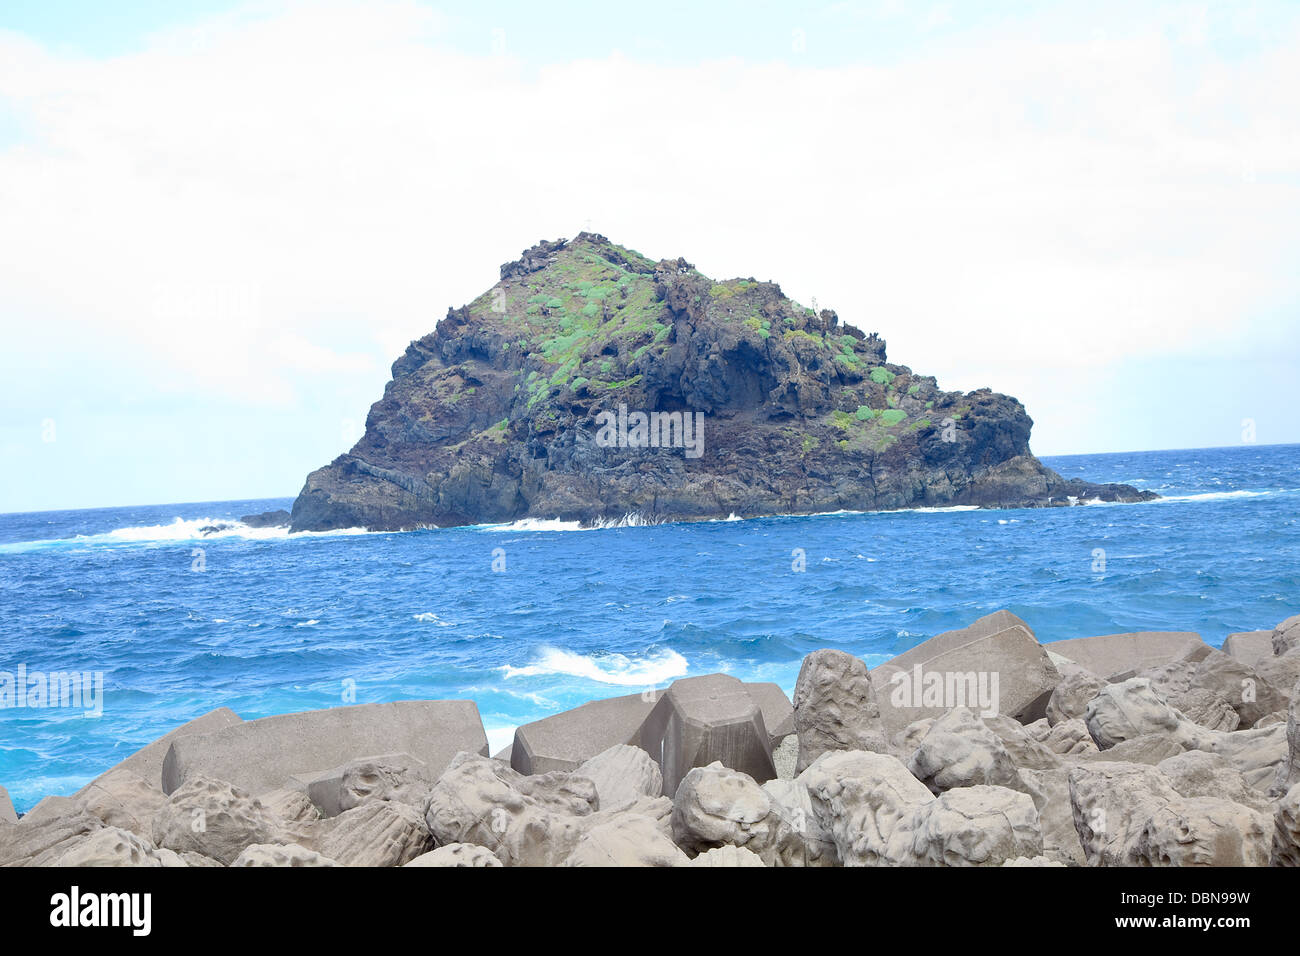 A volcanic rock a the coast of Garachico Stock Photo